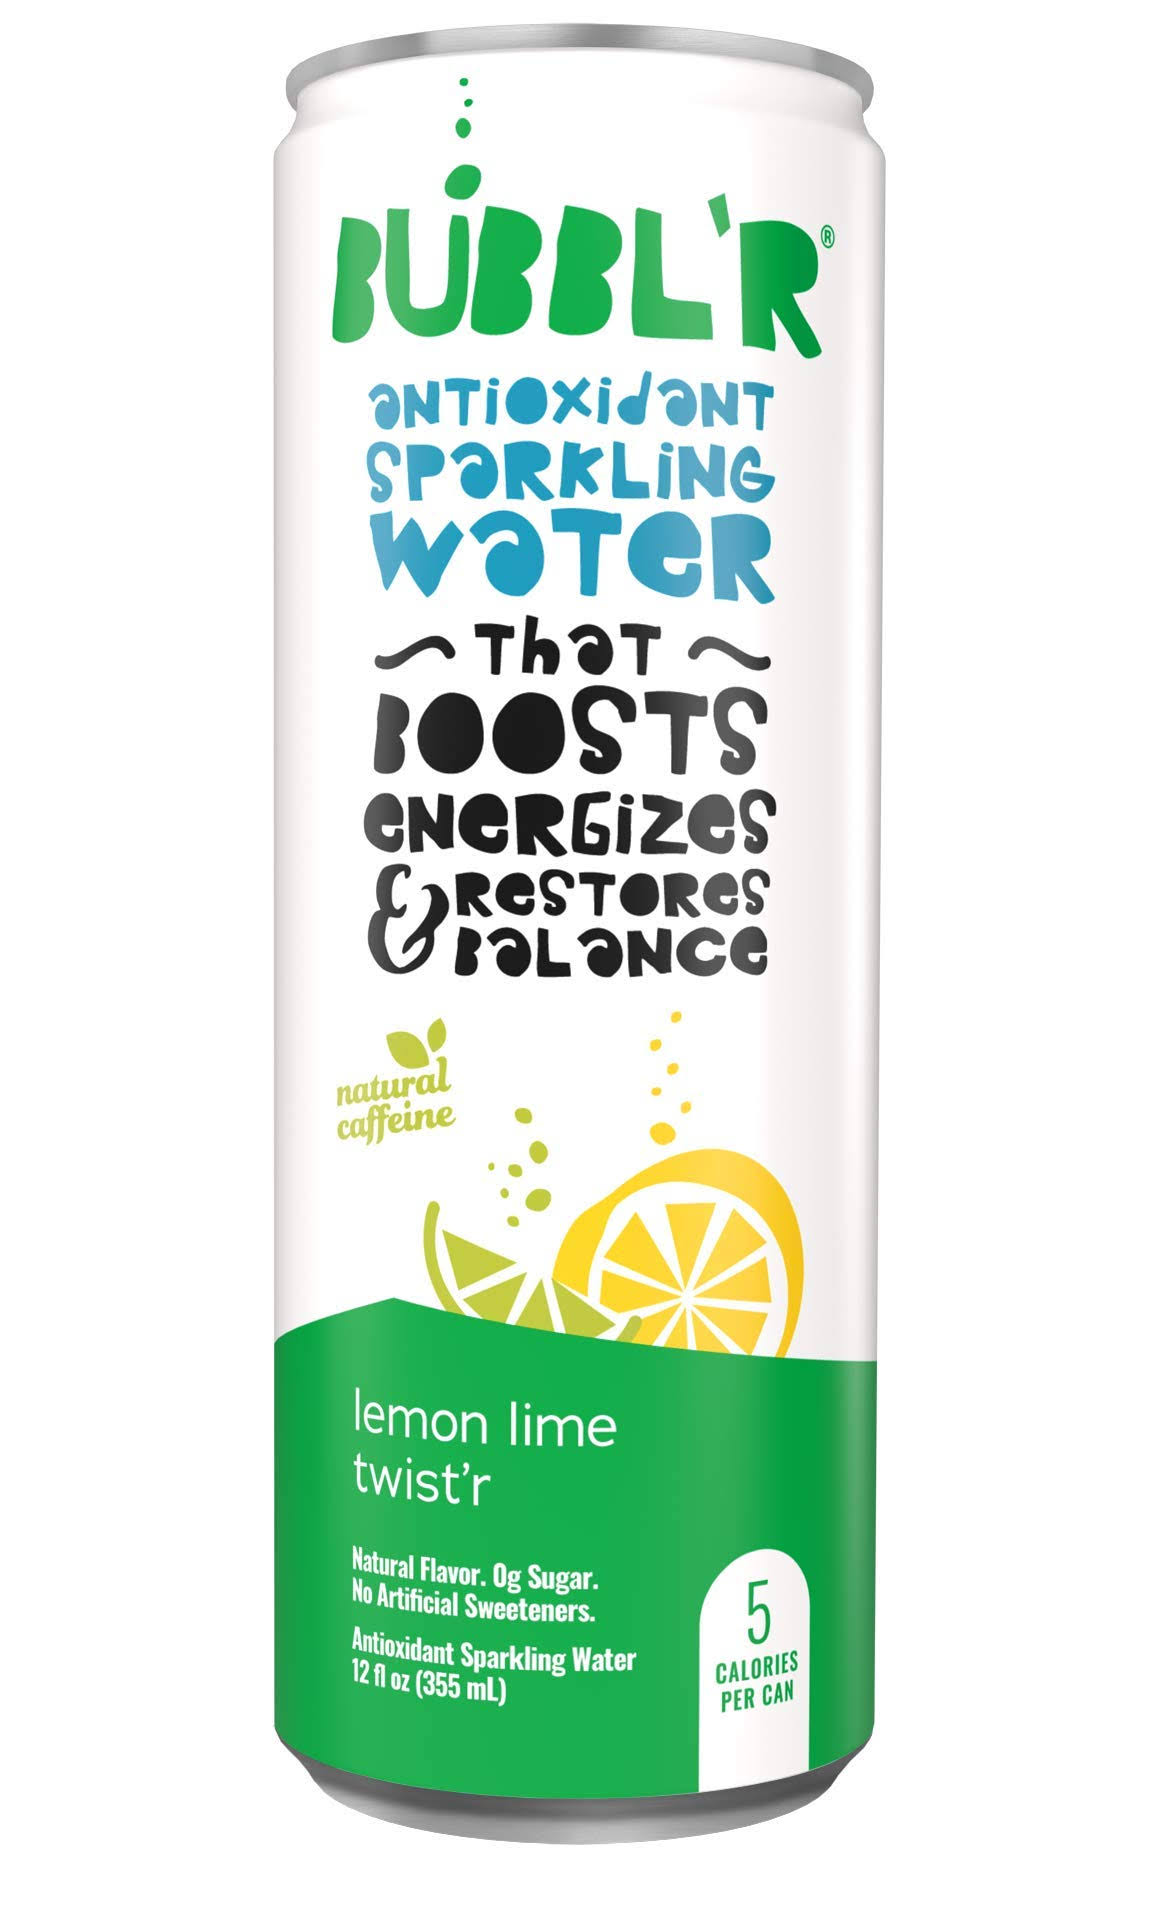 Bubbl'r Lemon Lime Twist'r Antioxidant Sparkling Water - 12 fl oz